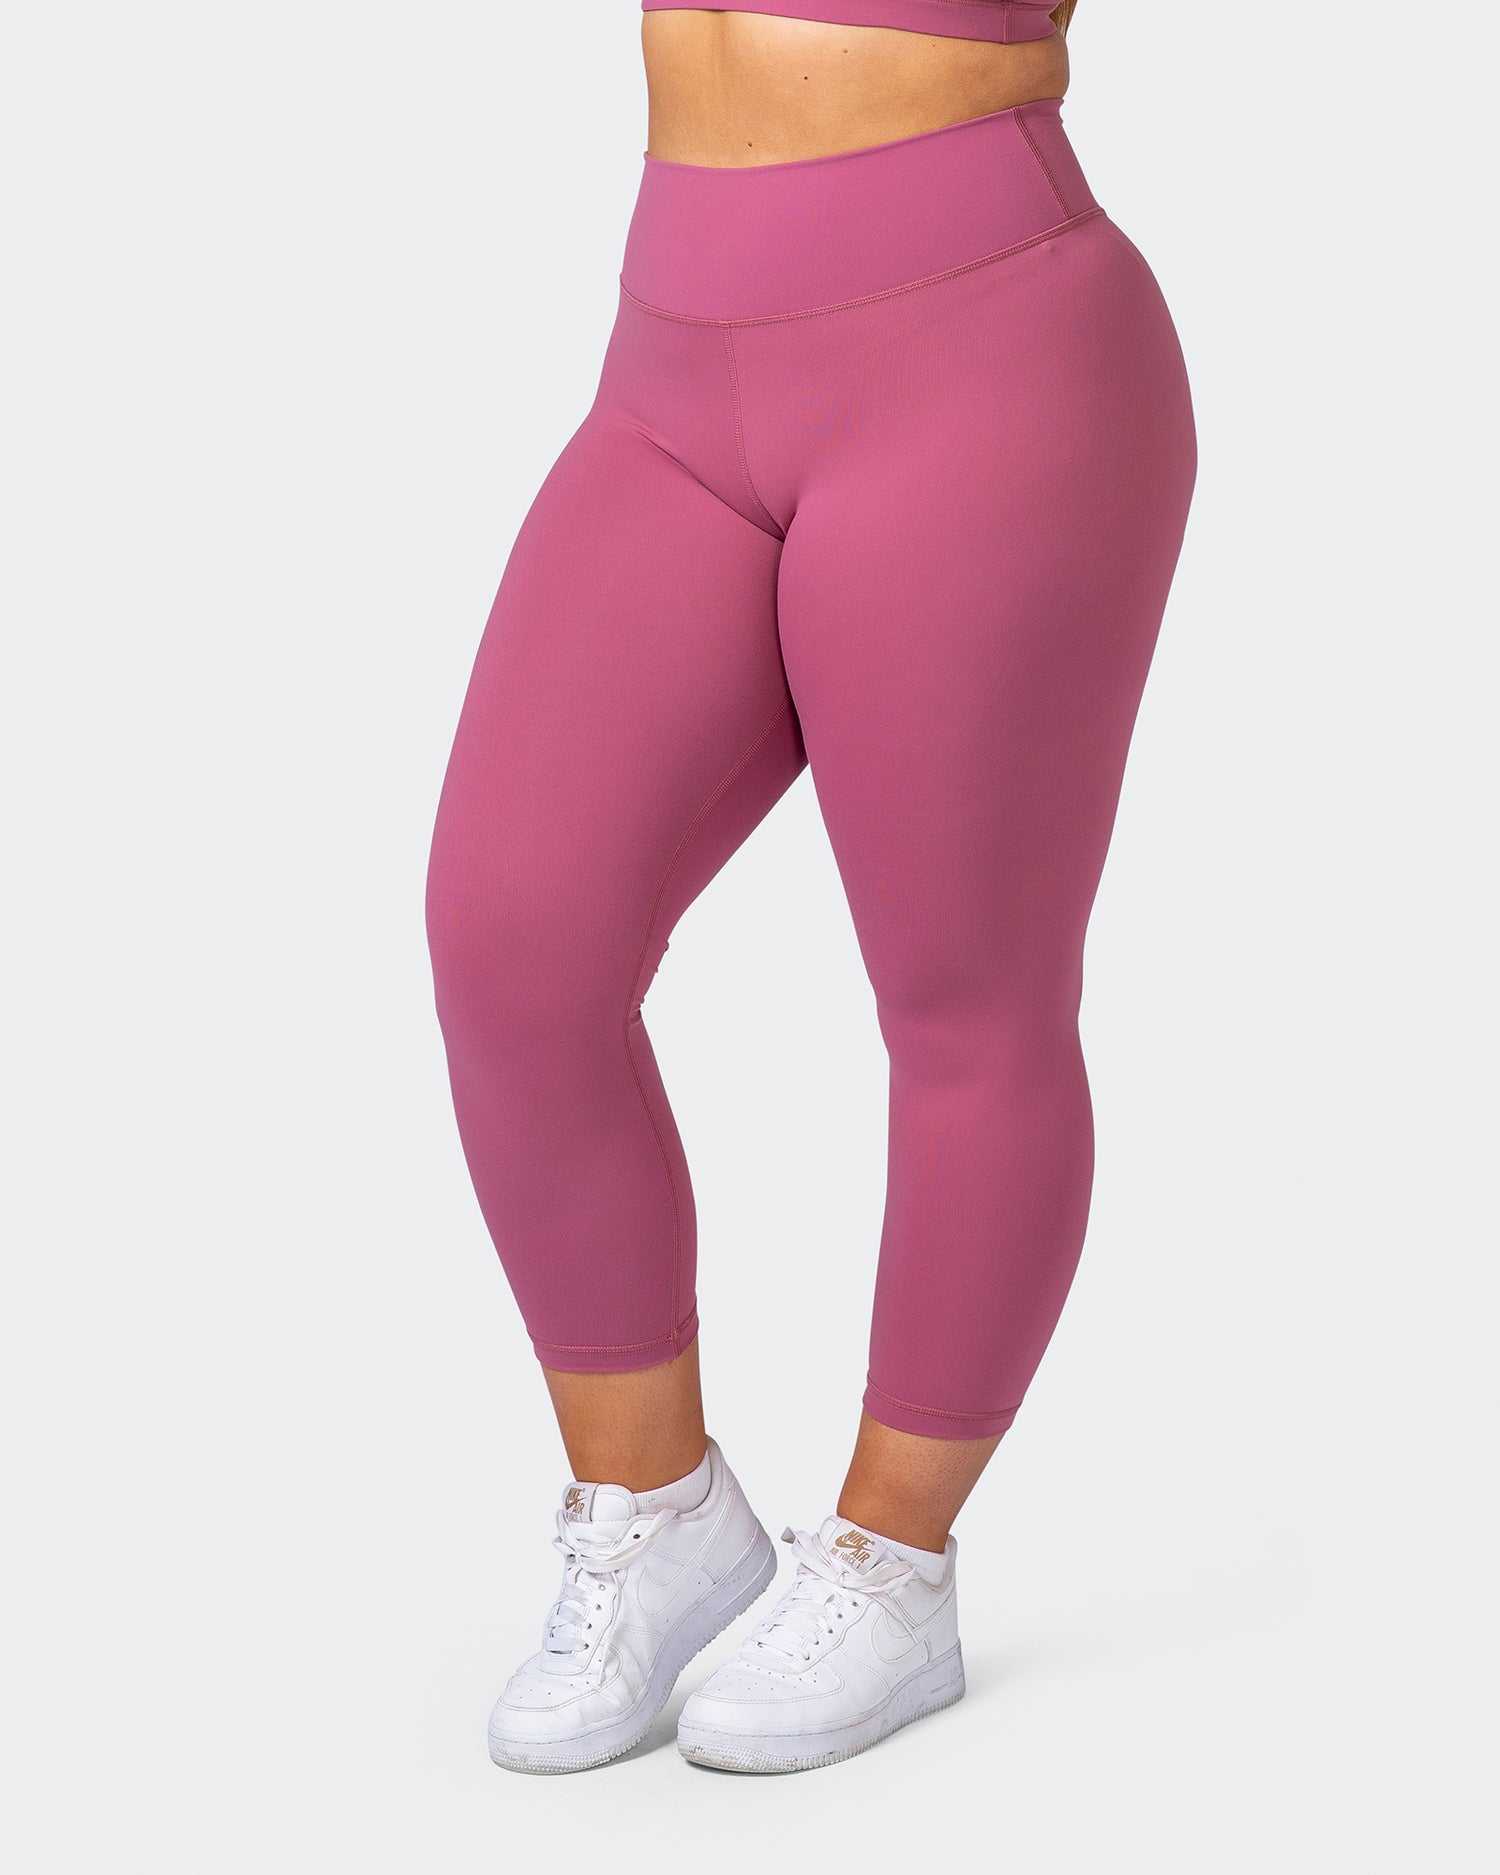 Nike Pants Womens 1X Plus Black Orange Air 7/8 Leggings Running Yoga New  768